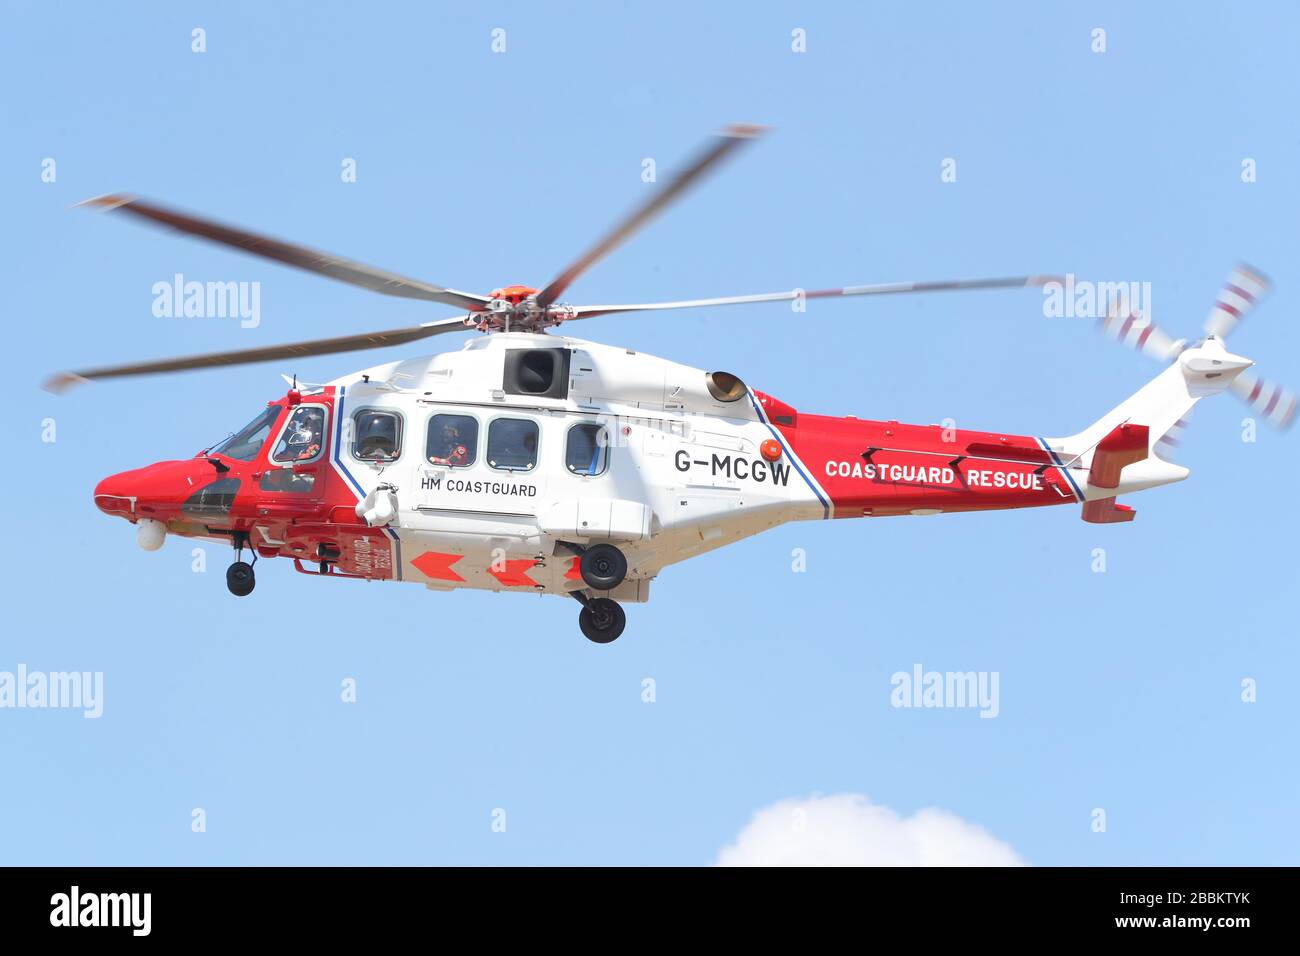 Coastguard Leonardo AW189 helicopter G-MCGW at the Royal International Air Tattoo RIAT 2018 at RAF Fairford, Gloucestershire, UK Stock Photo